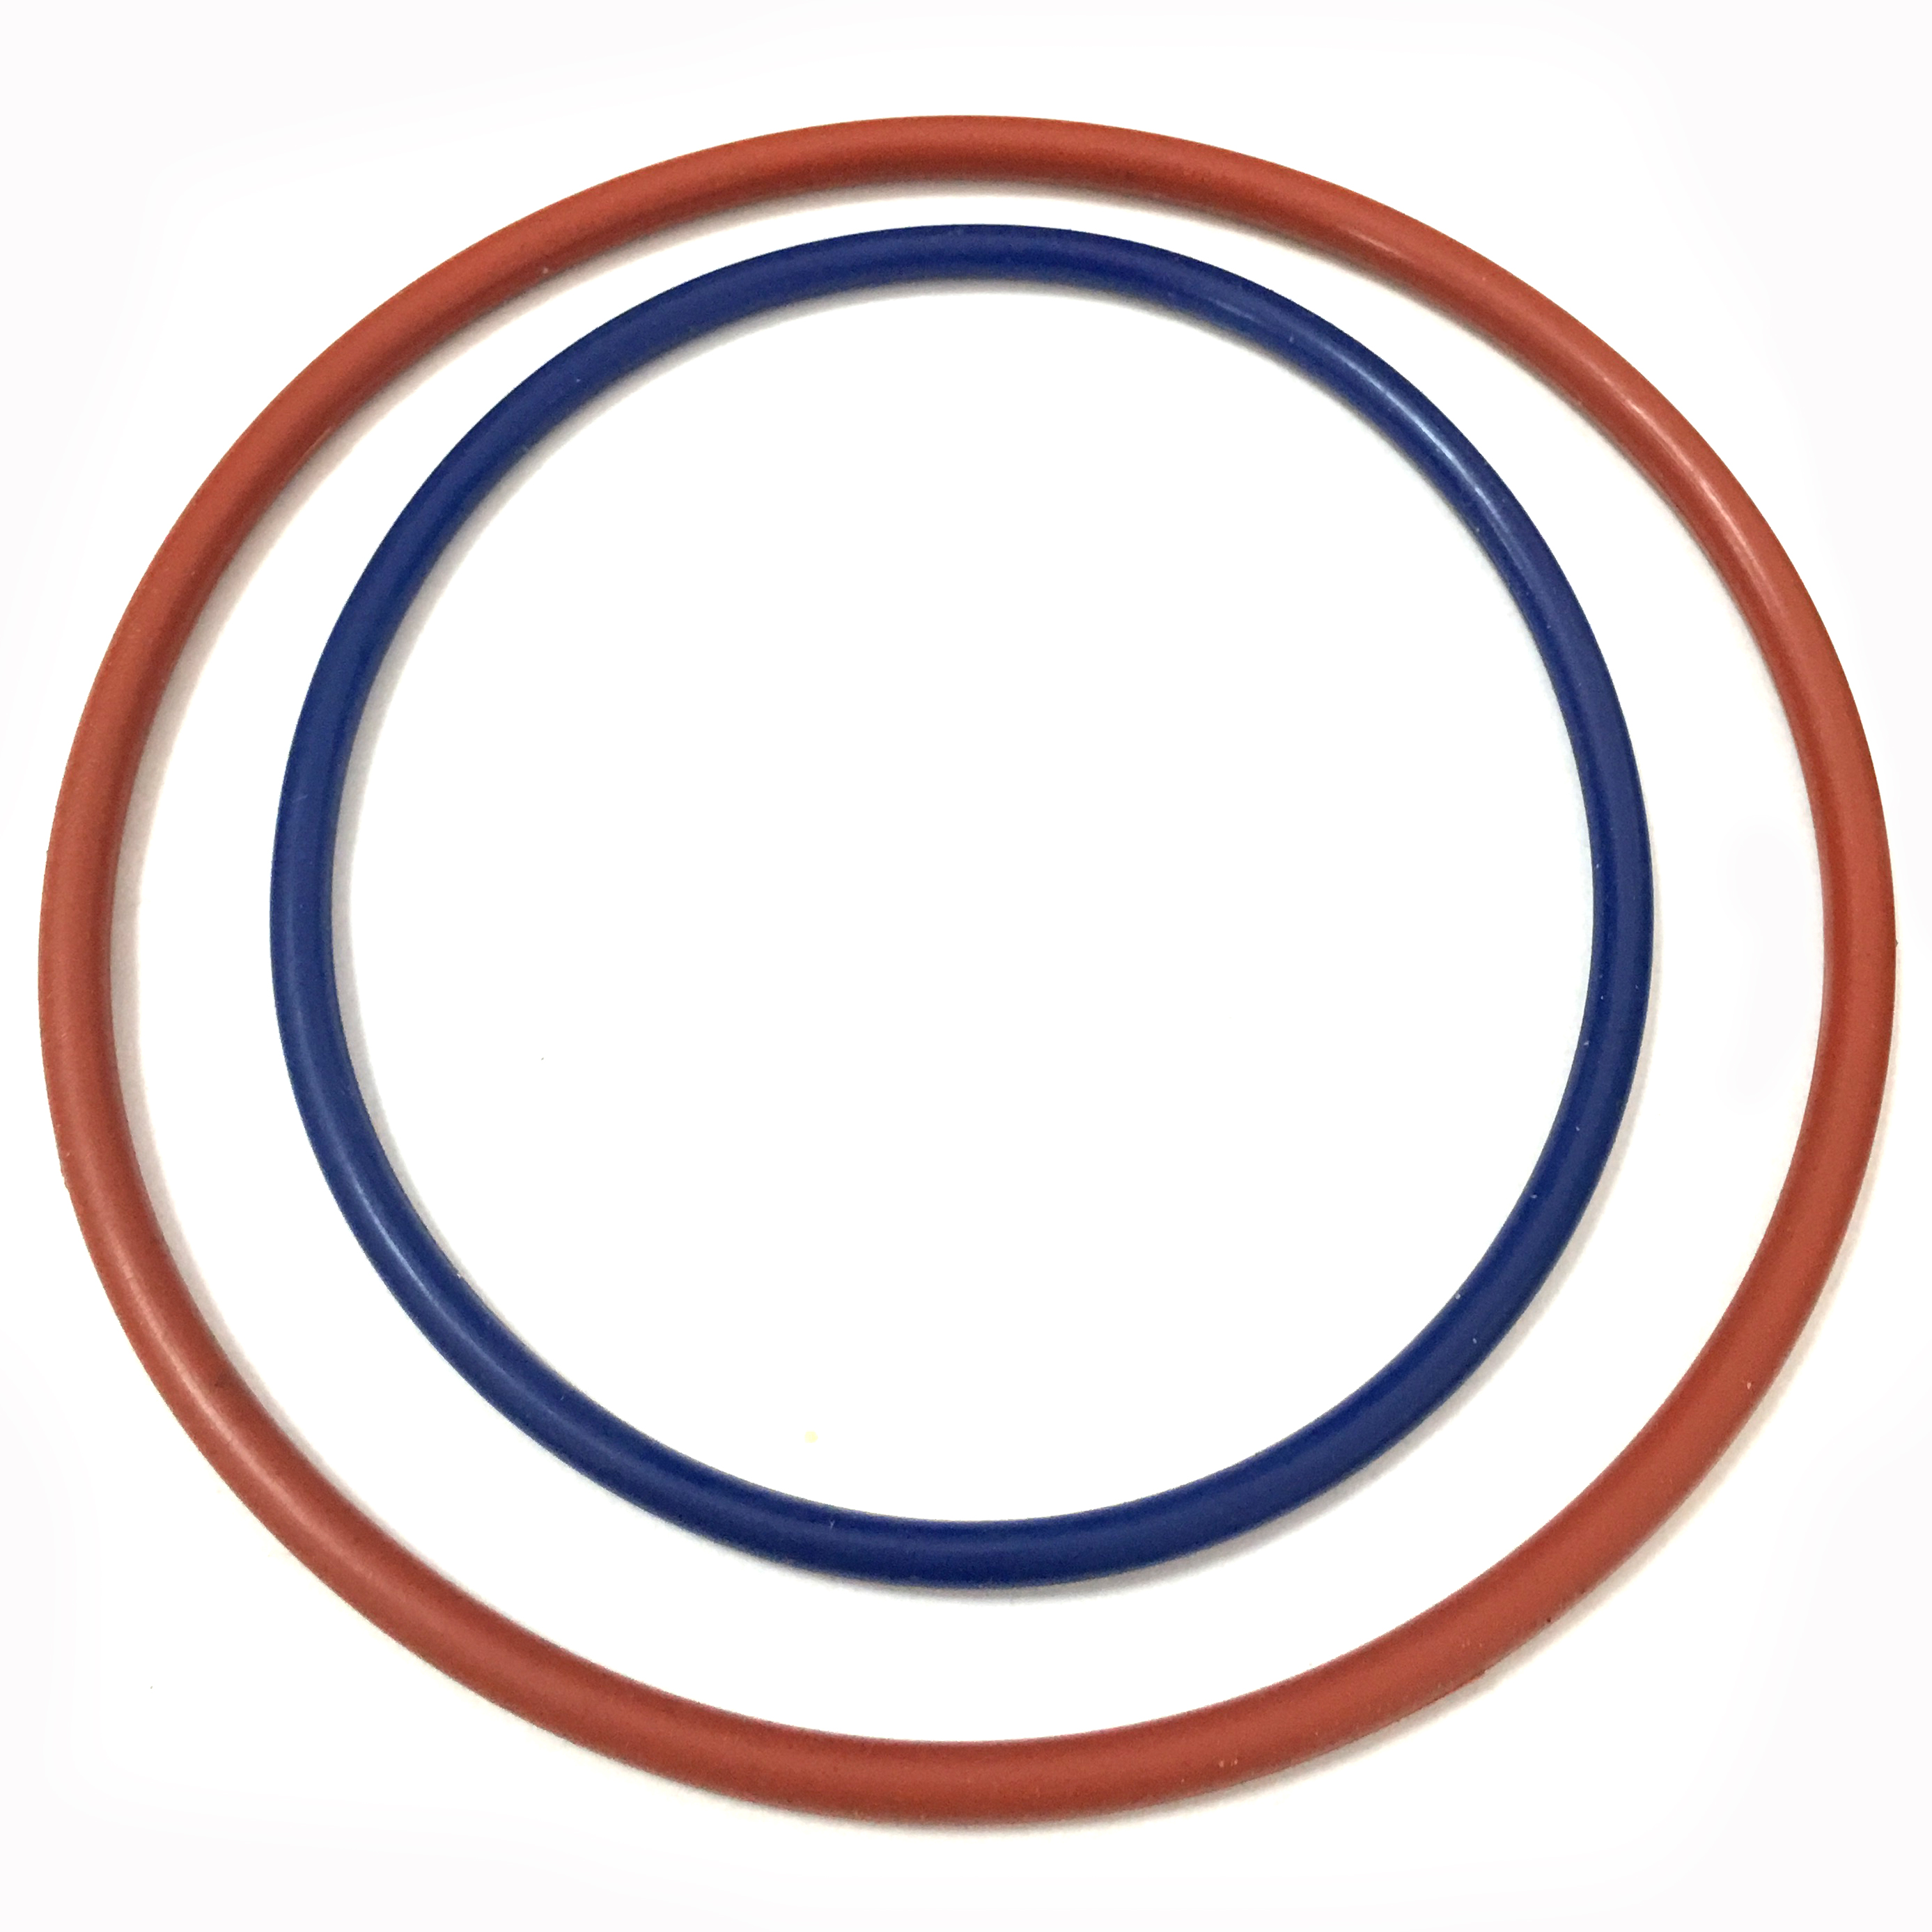 Colorful Silicone O Ring 